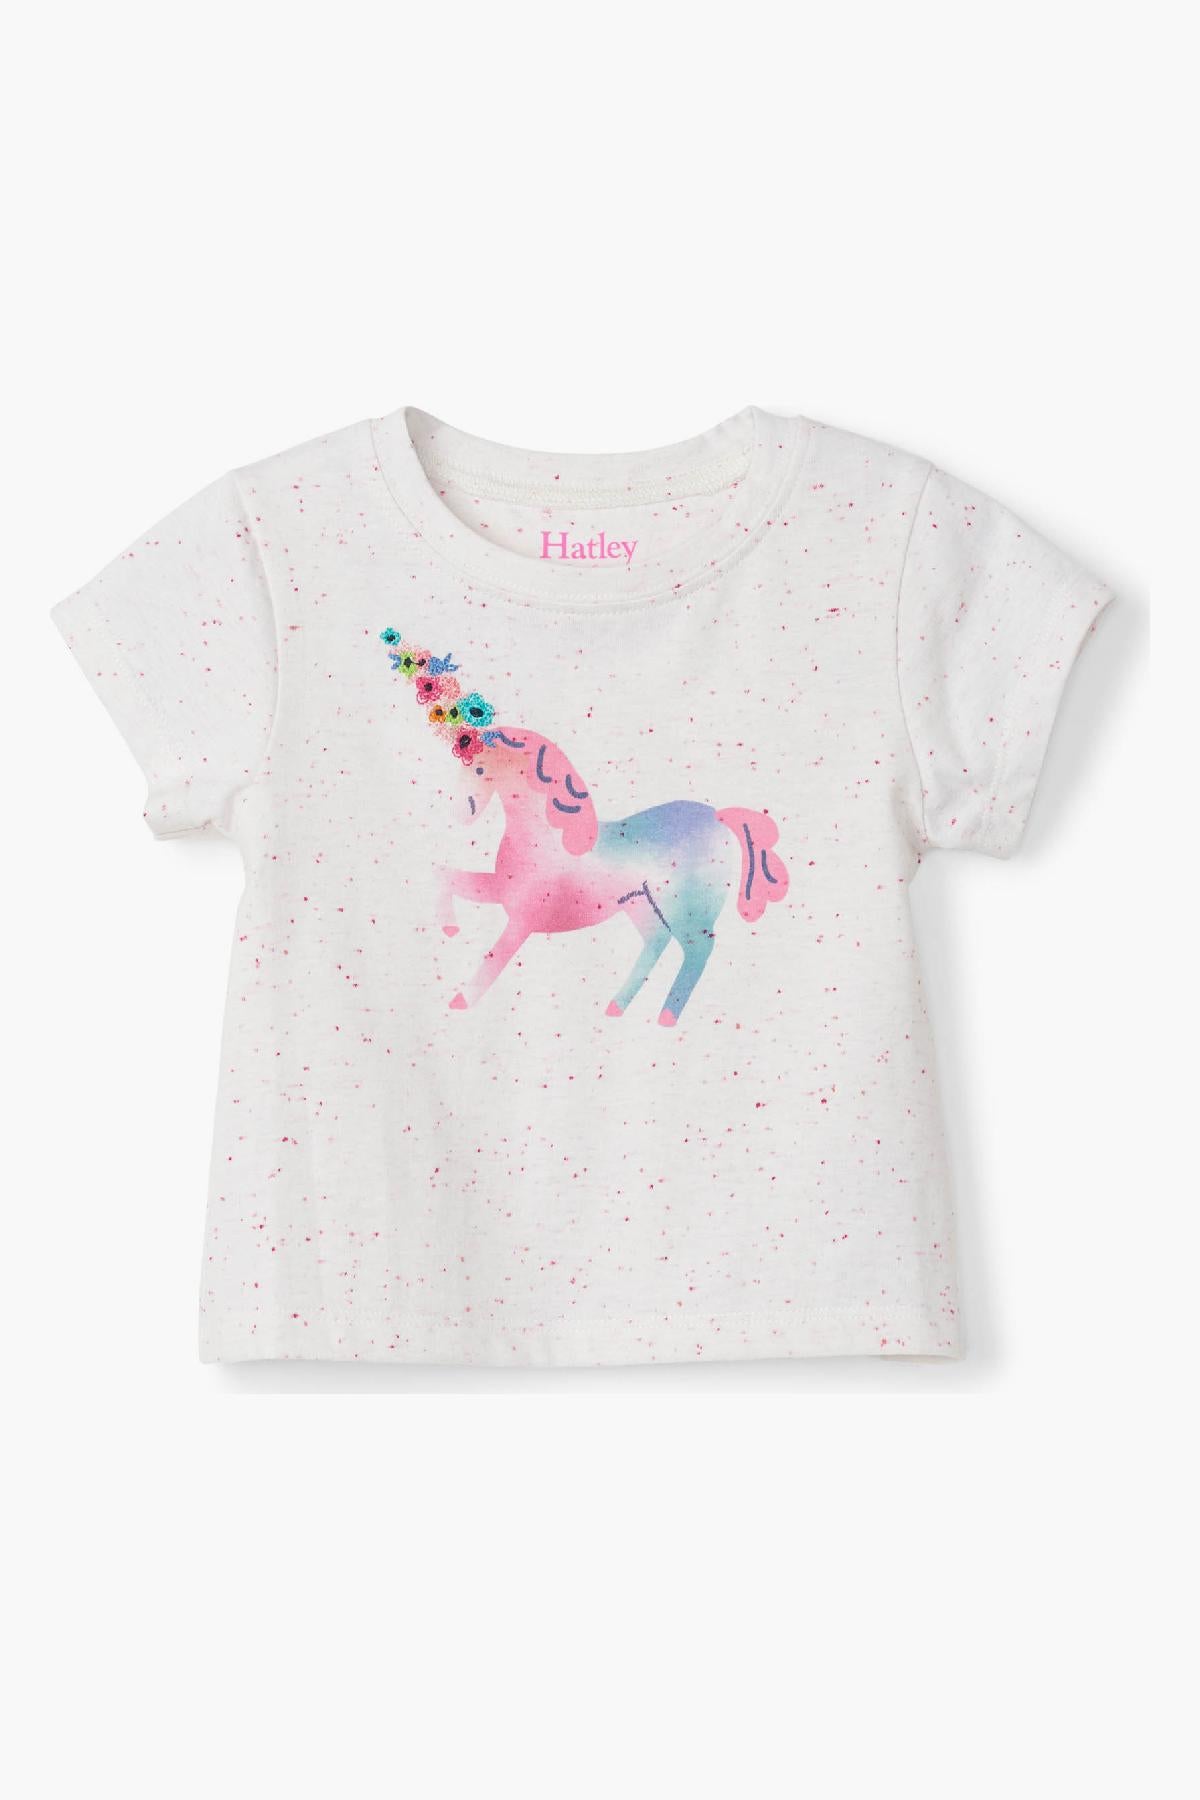 Hatley Rainbow Unicorn Baby Bodysuit with Hat